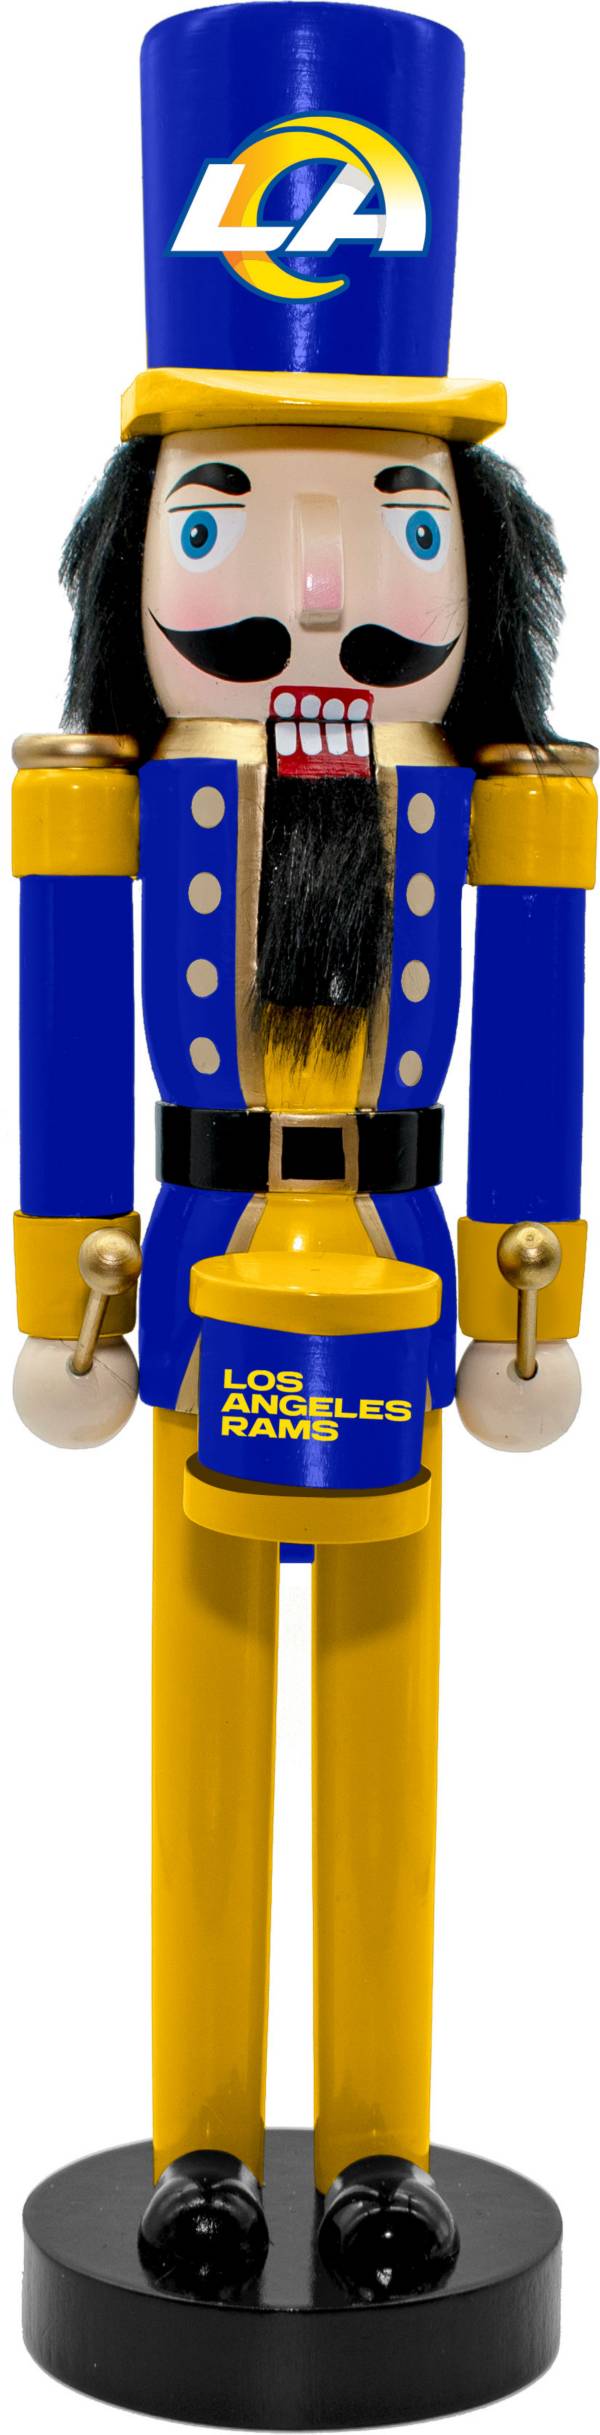 Memory Company Los Angeles Rams 14 Inch Nutcracker product image